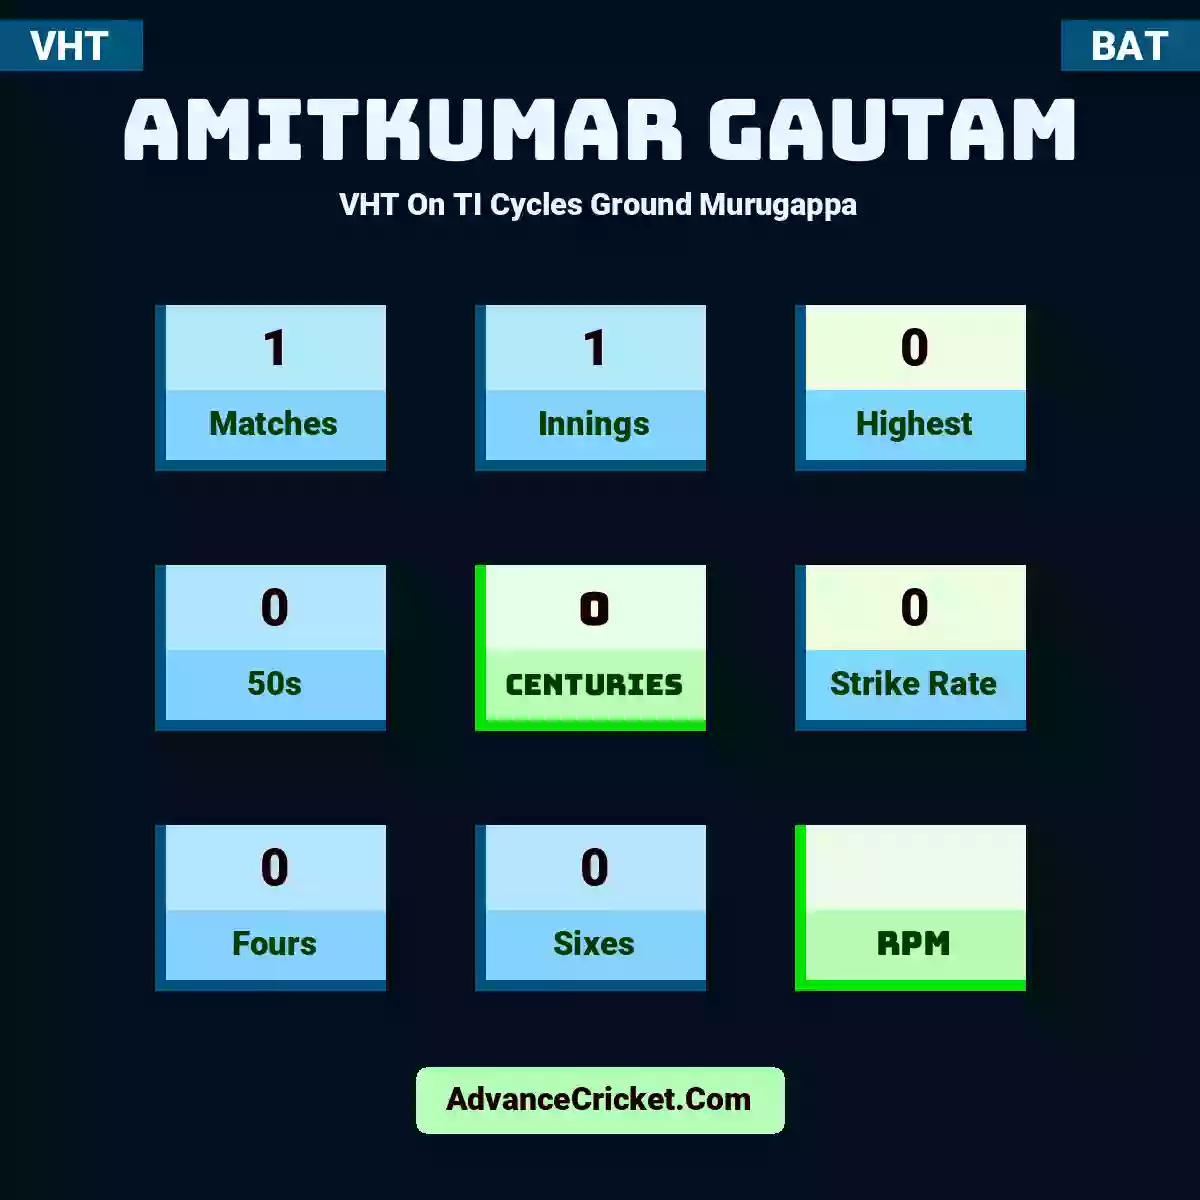 Amitkumar Gautam VHT  On TI Cycles Ground Murugappa, Amitkumar Gautam played 1 matches, scored 0 runs as highest, 0 half-centuries, and 0 centuries, with a strike rate of 0. A.Gautam hit 0 fours and 0 sixes.